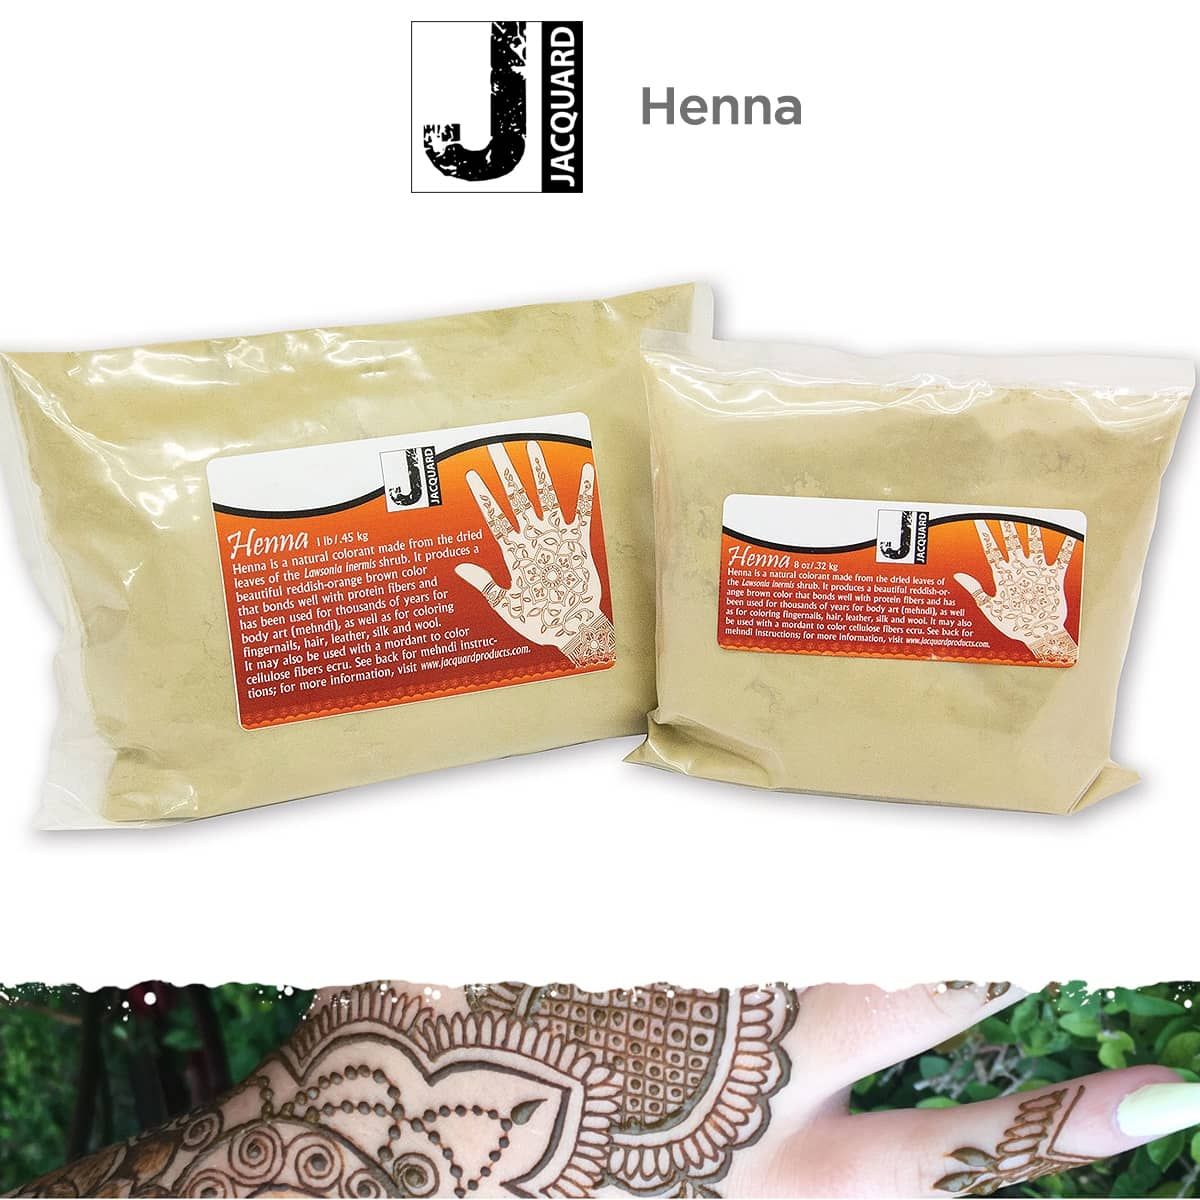 Henna - 1 Lb & 8 oz bags 